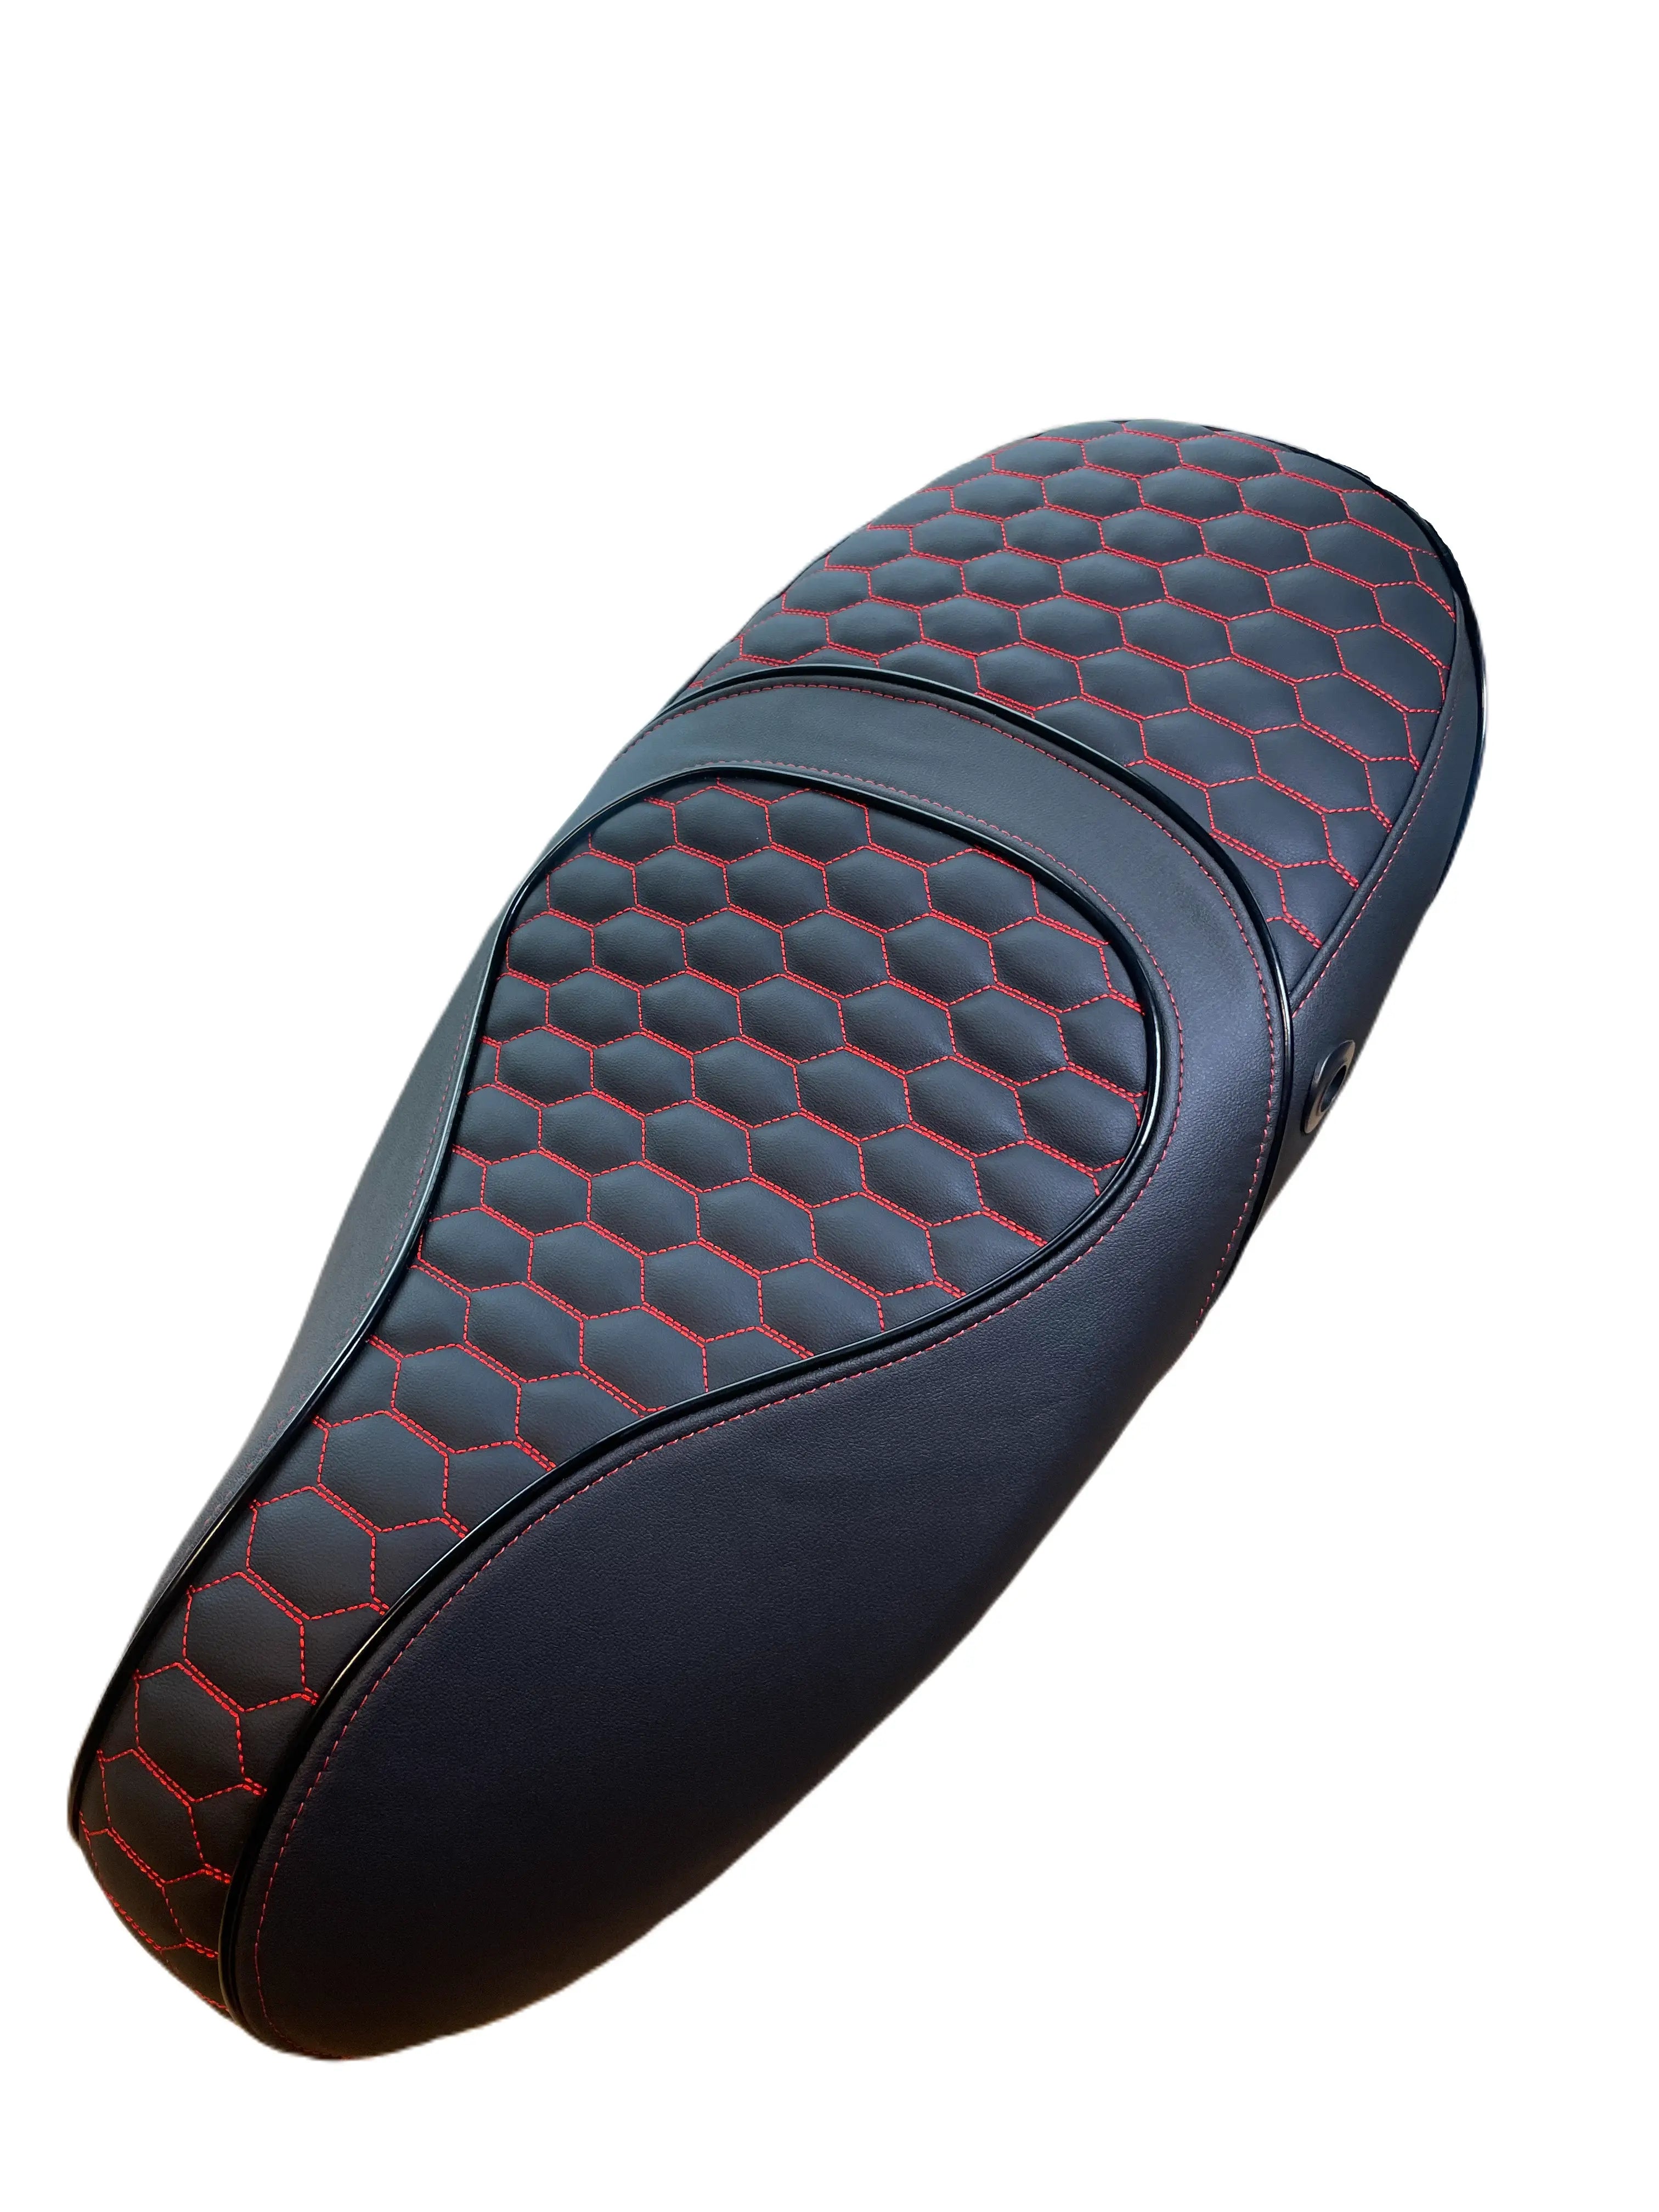 Vespa Sprint Custom Dubbelzits Zadel met RS-audi Rode Stiksels en Glans Zwarte Bies - High Quality